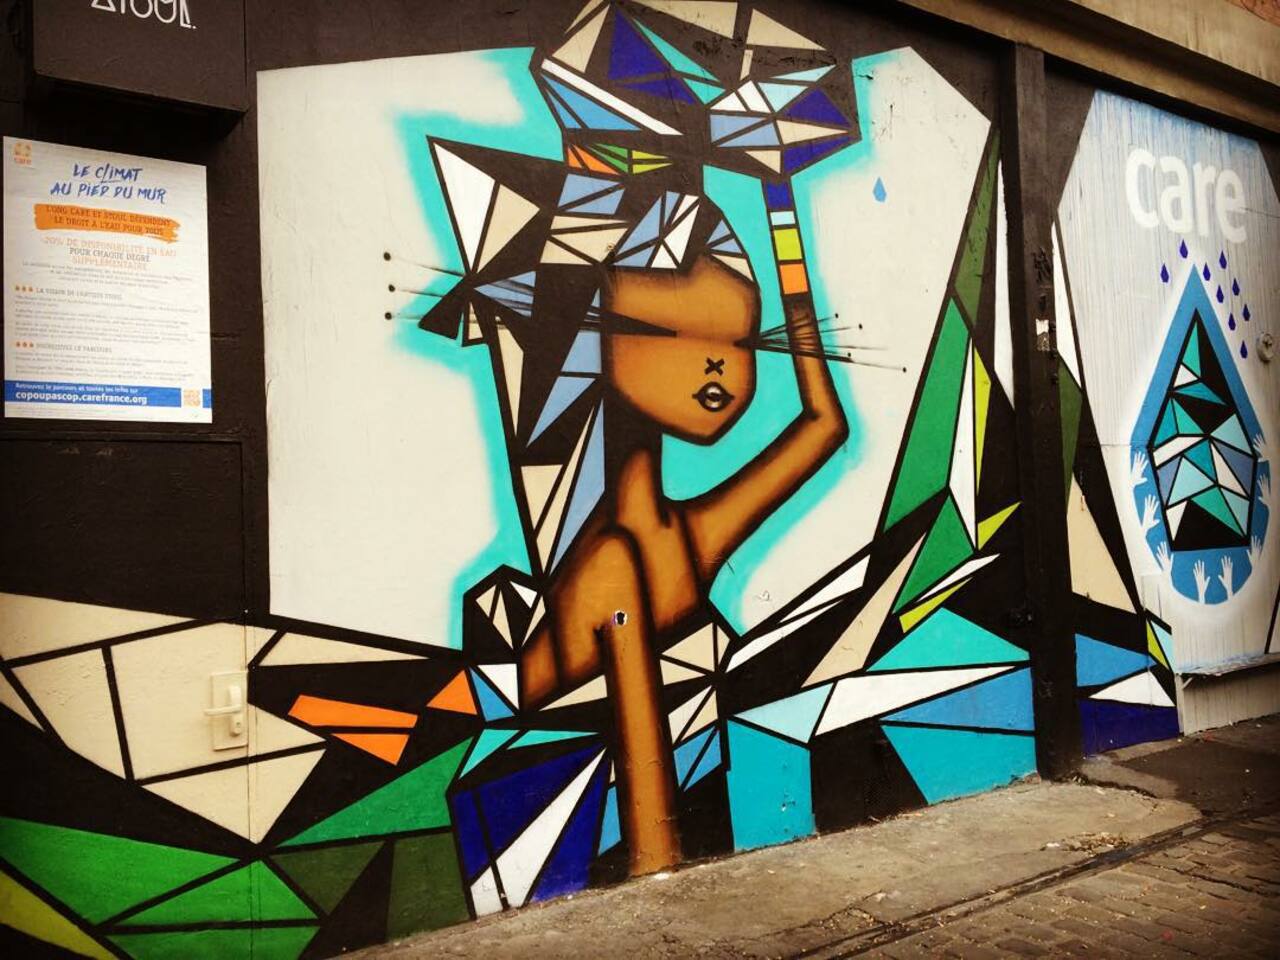 #Paris #graffiti photo by @allaboutparisandbeyond http://ift.tt/1jNwY4s #StreetArt http://t.co/GxgDRU3wXE